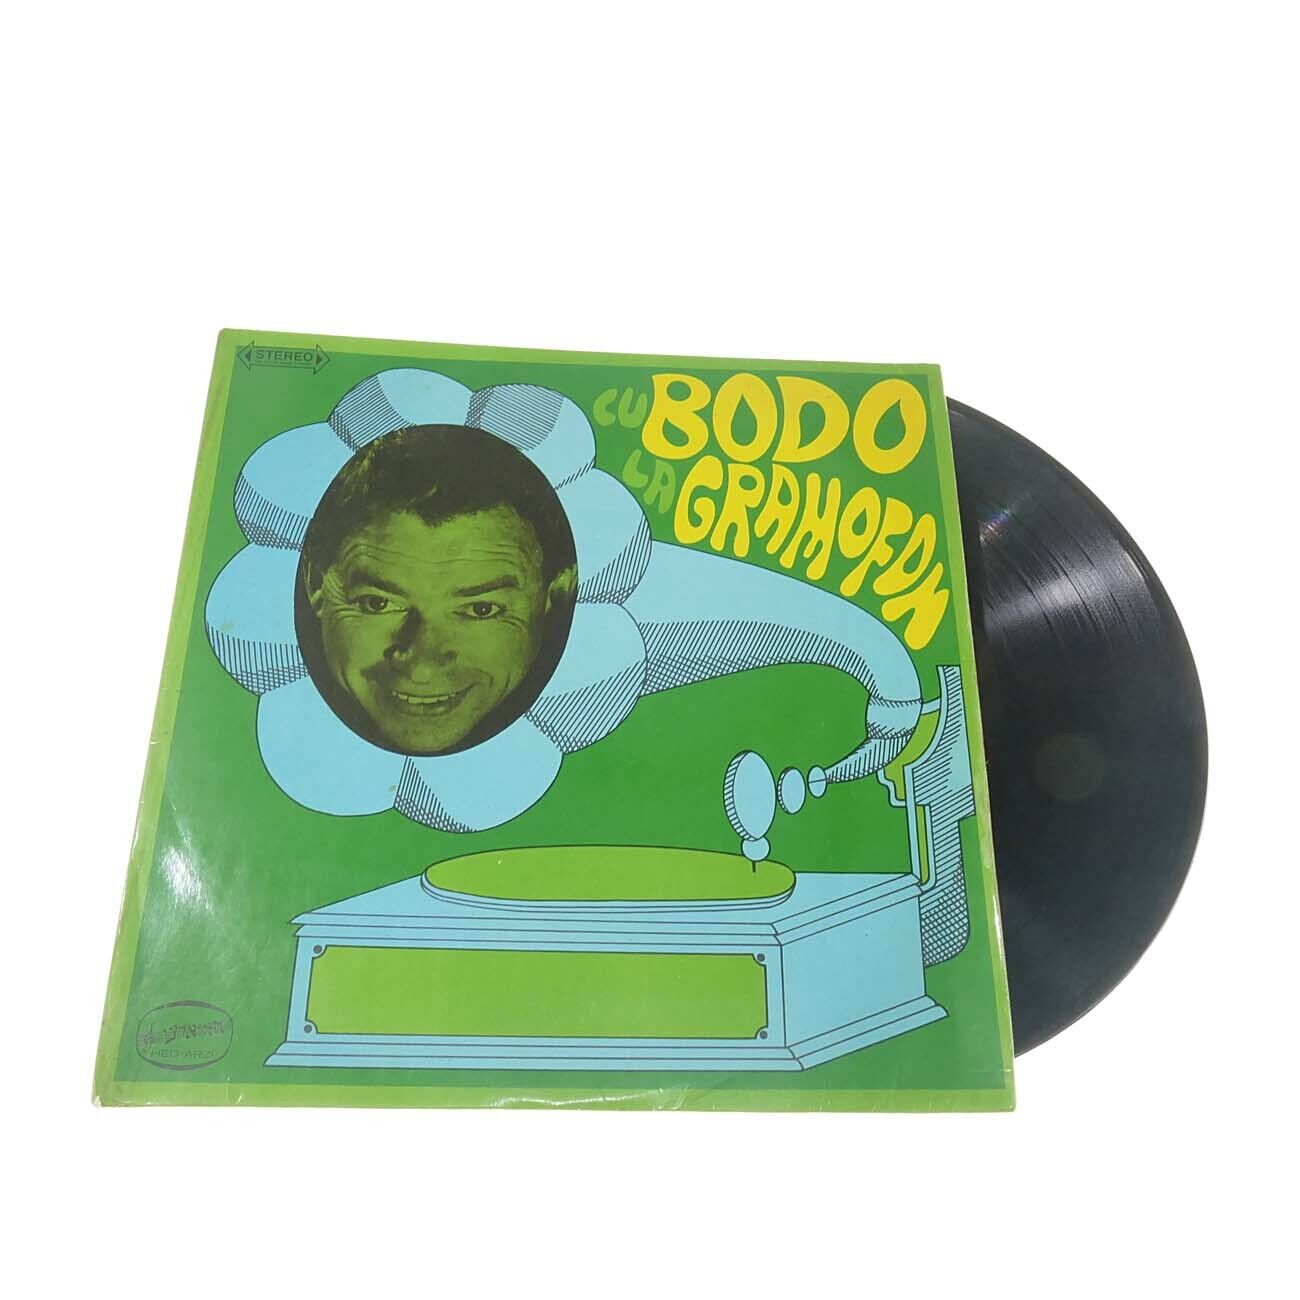 Vintage Record Cu Bodo La Gramofon Jazz Pop Israel Records Vinyl LP Album